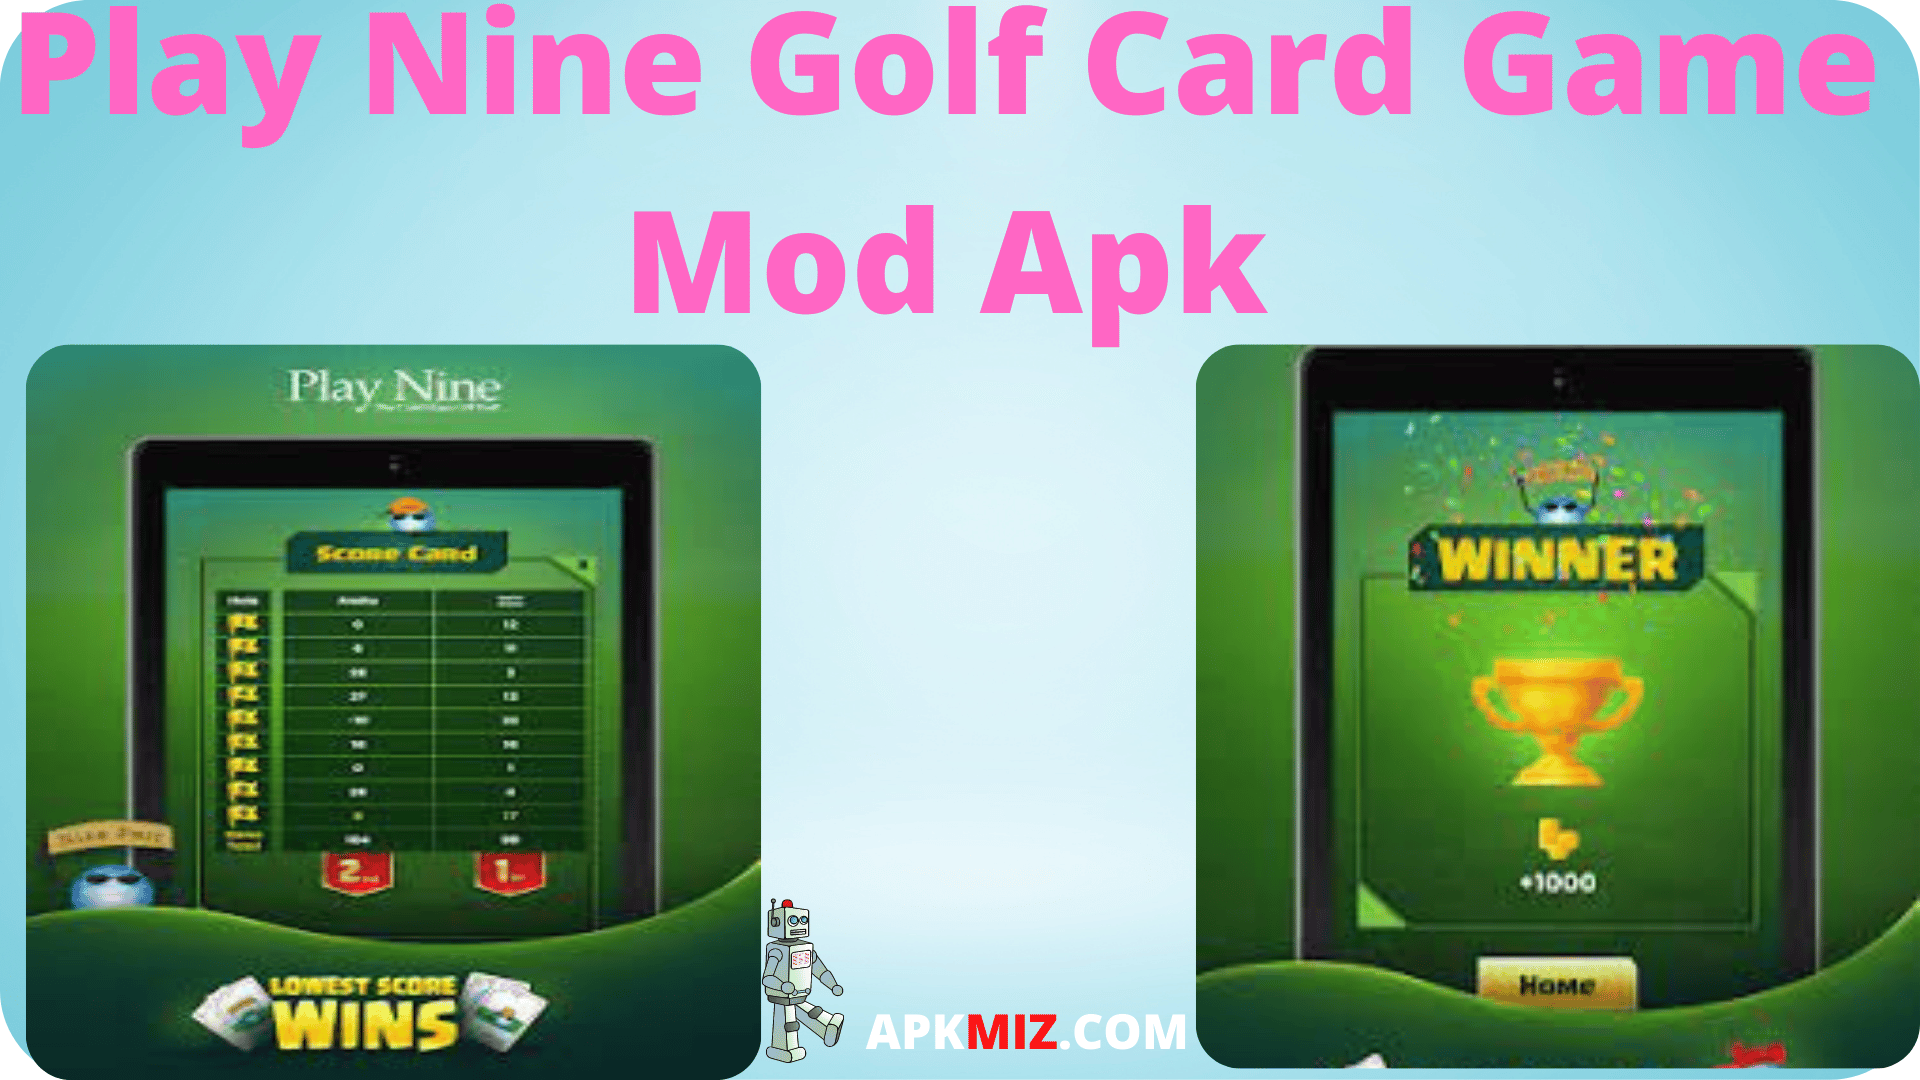 Play Nine Golf Card Game Mod Apk